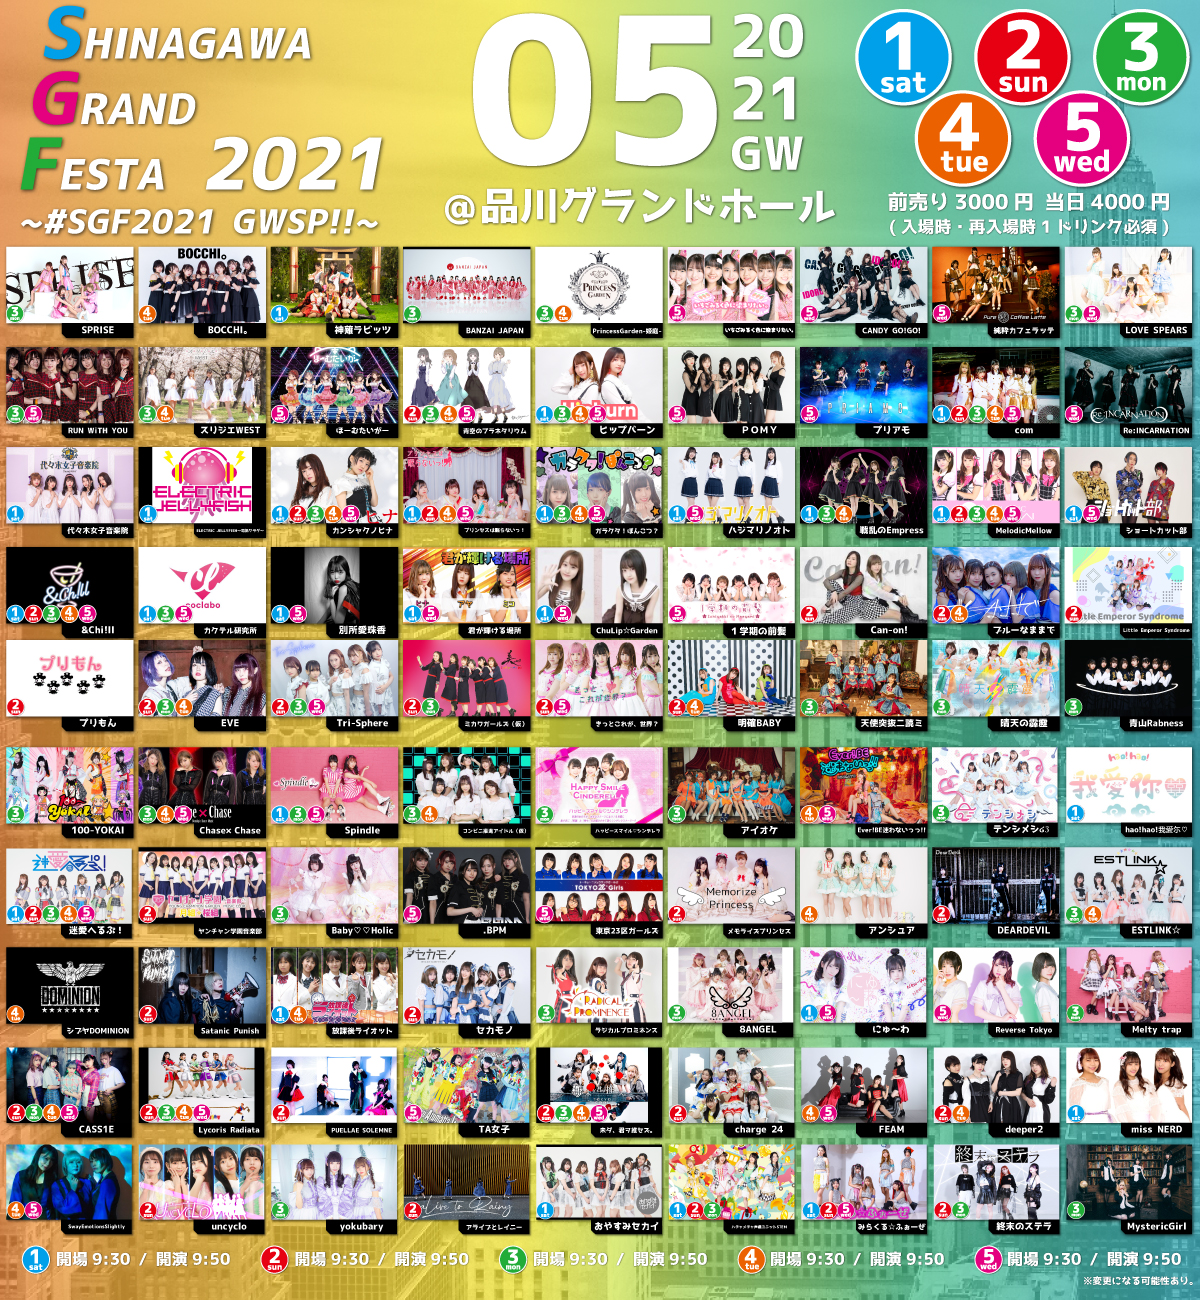 5/1~5 SHINAGAWA GRAND FESTA 2021 ~ #SGF2021 GWSP!! ~